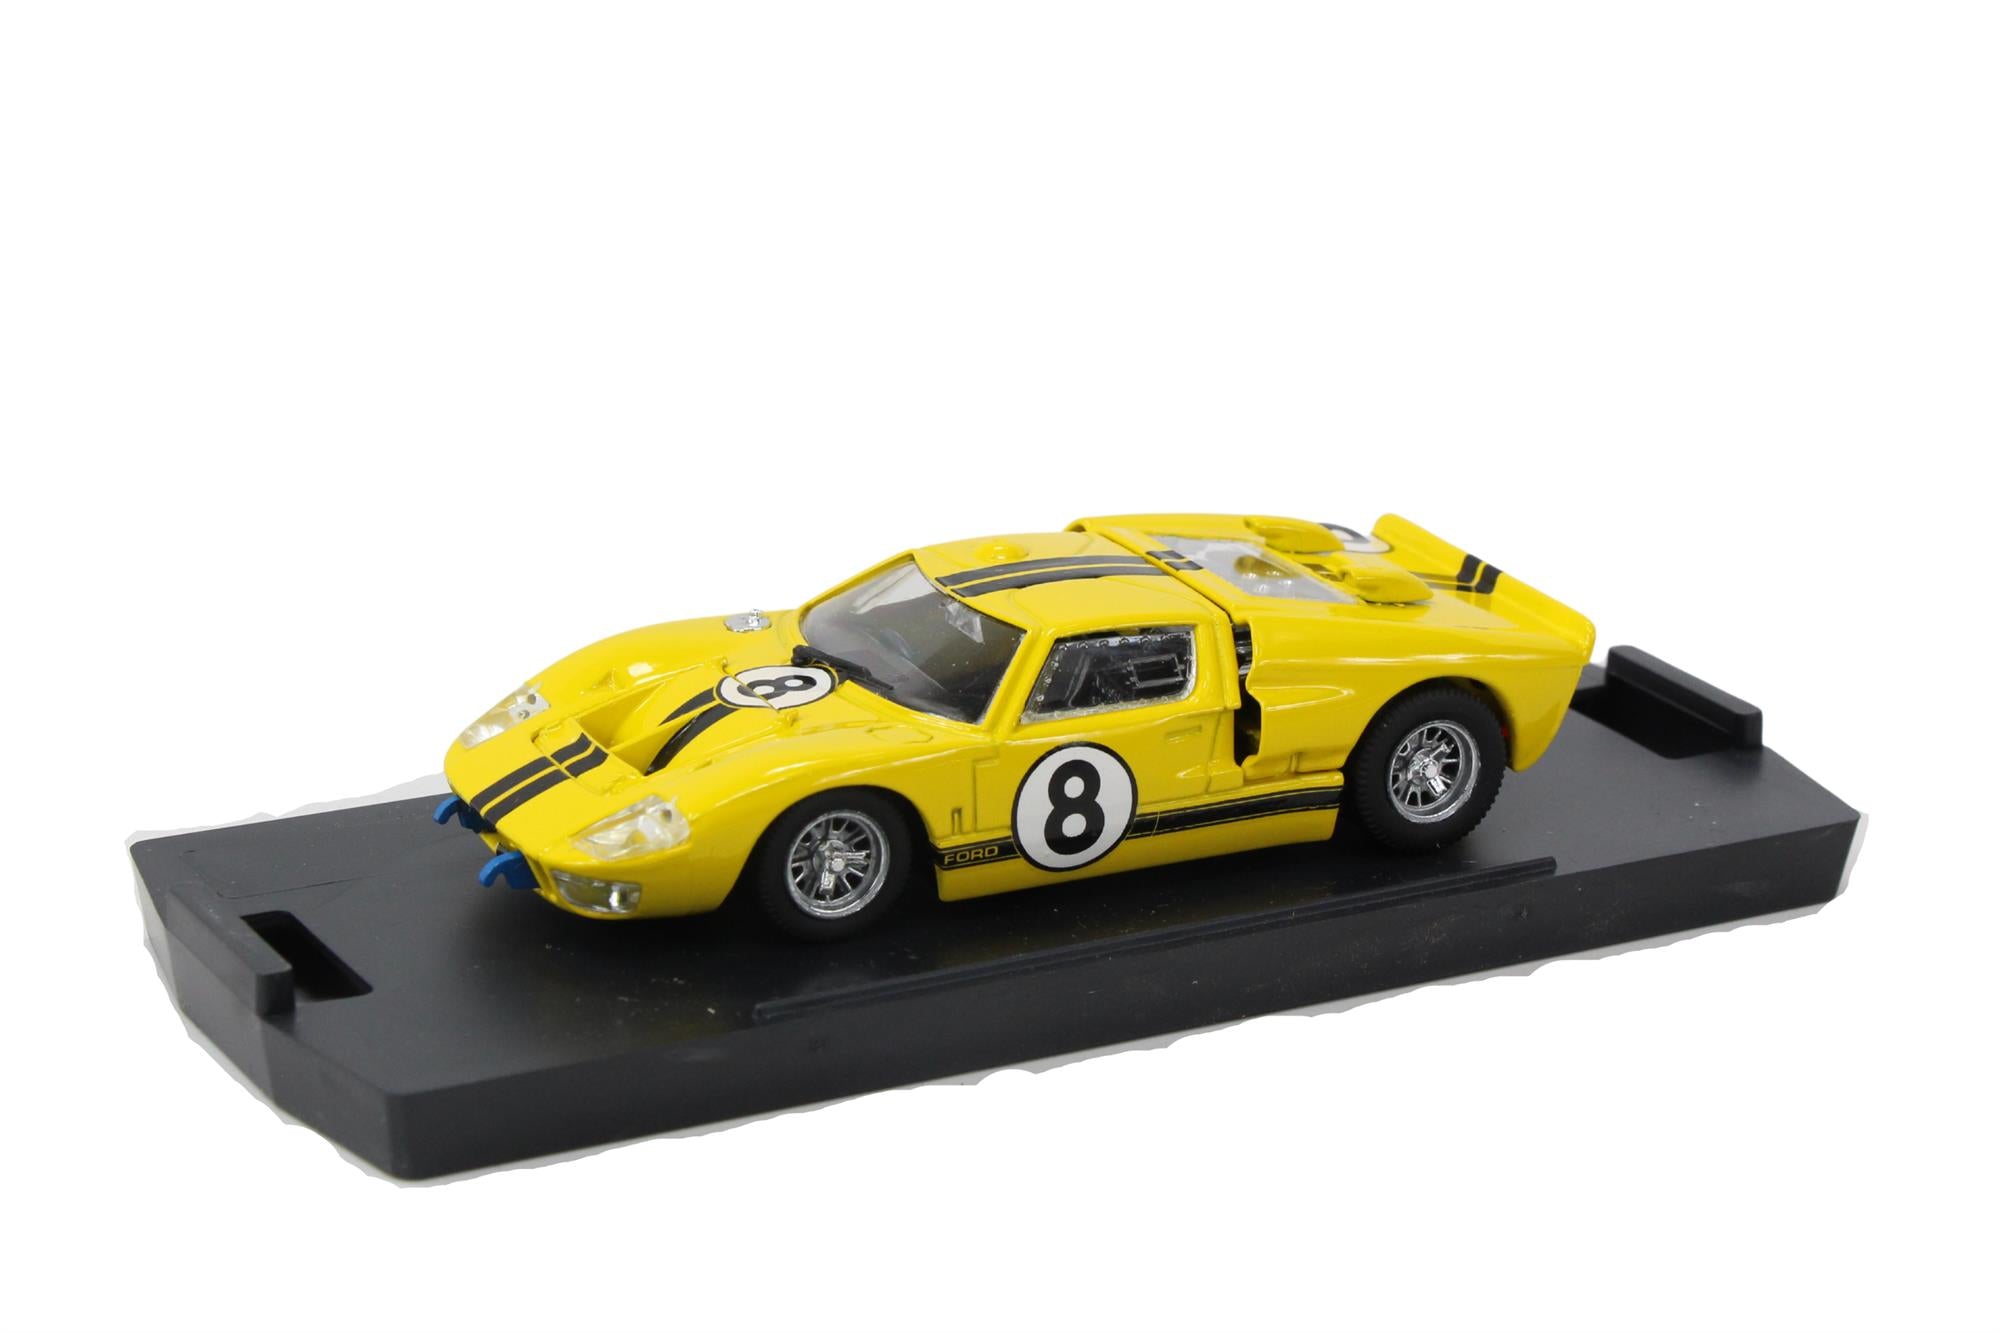 Bang Models - 1:43 Scale Diecast Ford GT40 MK2 "Le Mans 1966" #8 Whitmore & Gardner Racing Car - Original Factory Sealed Never Opened - Toptoys2u